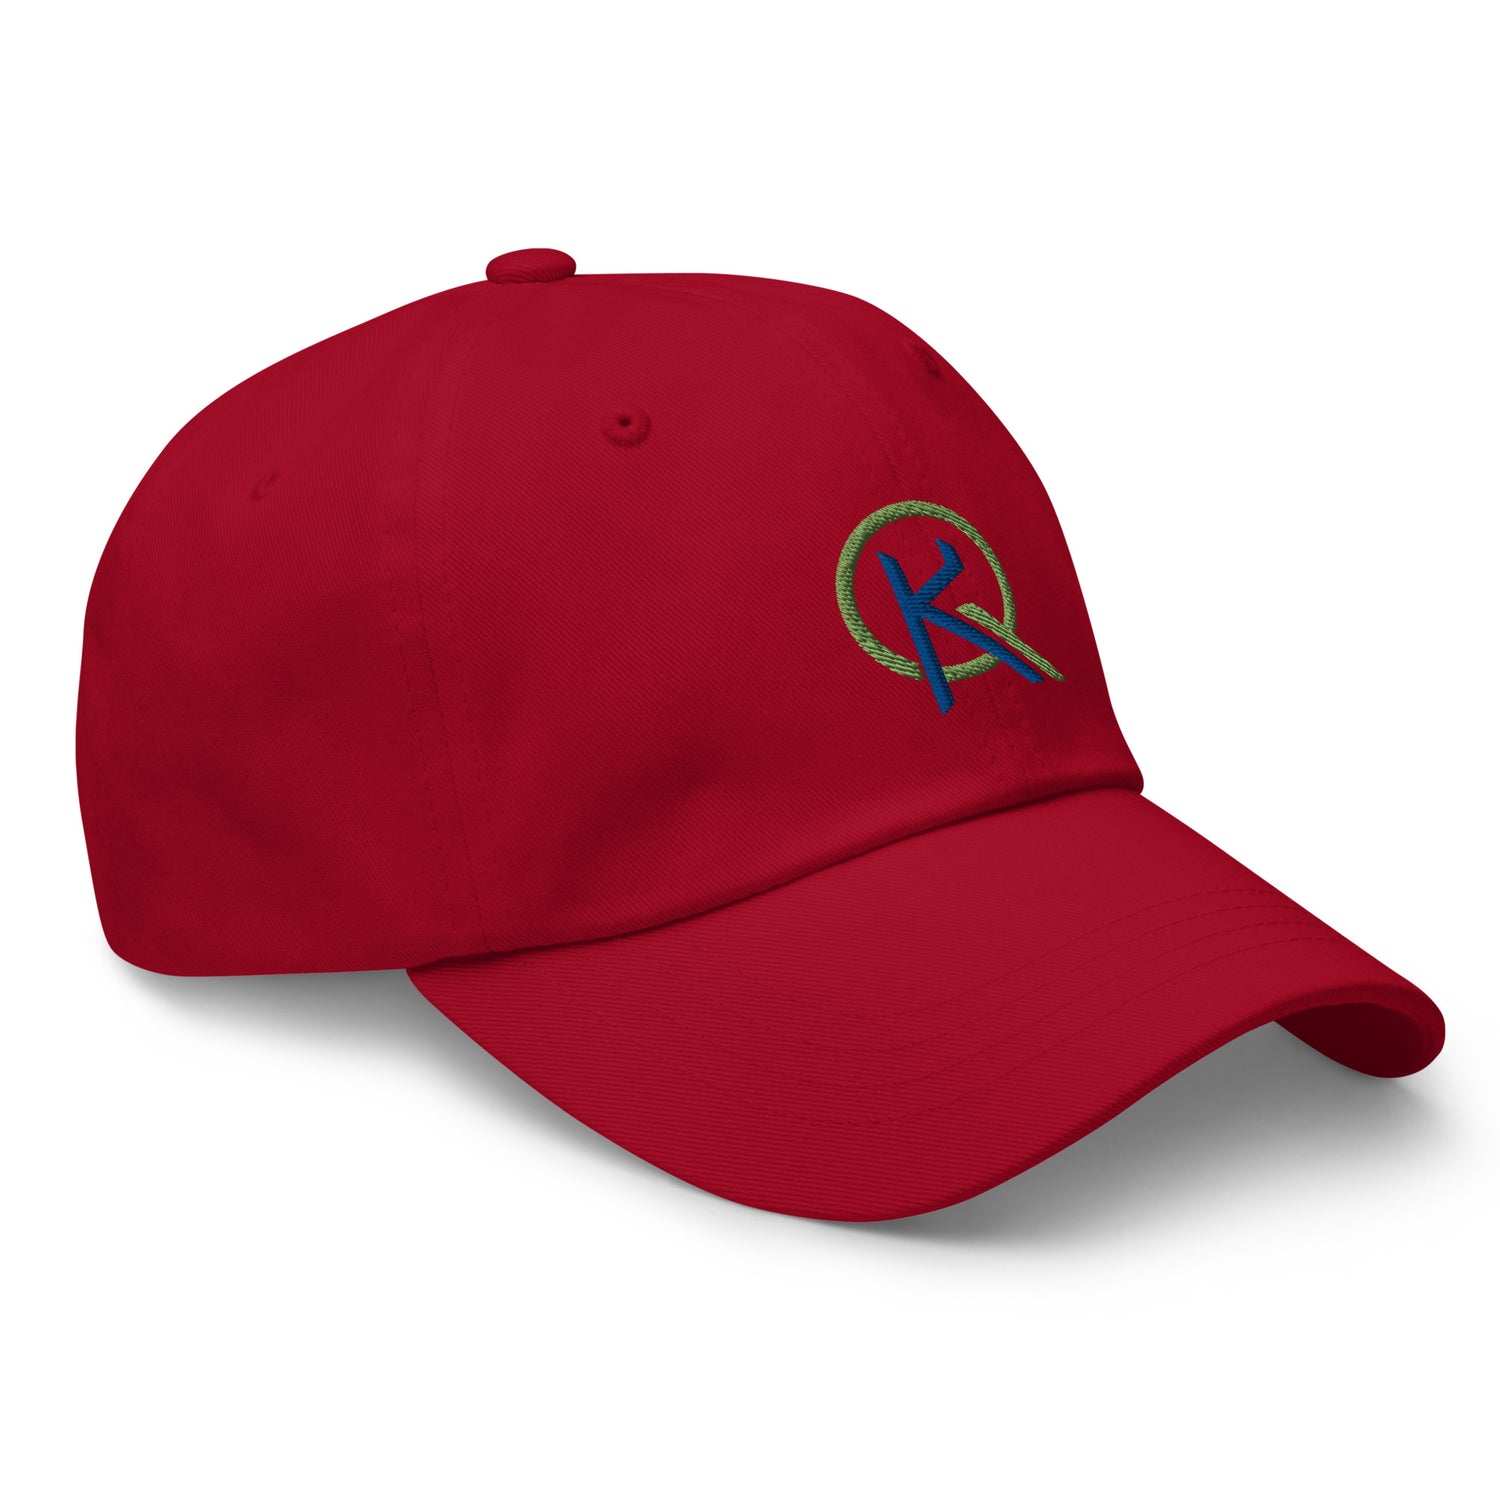 Kai Queen "Essential" hat - Fan Arch